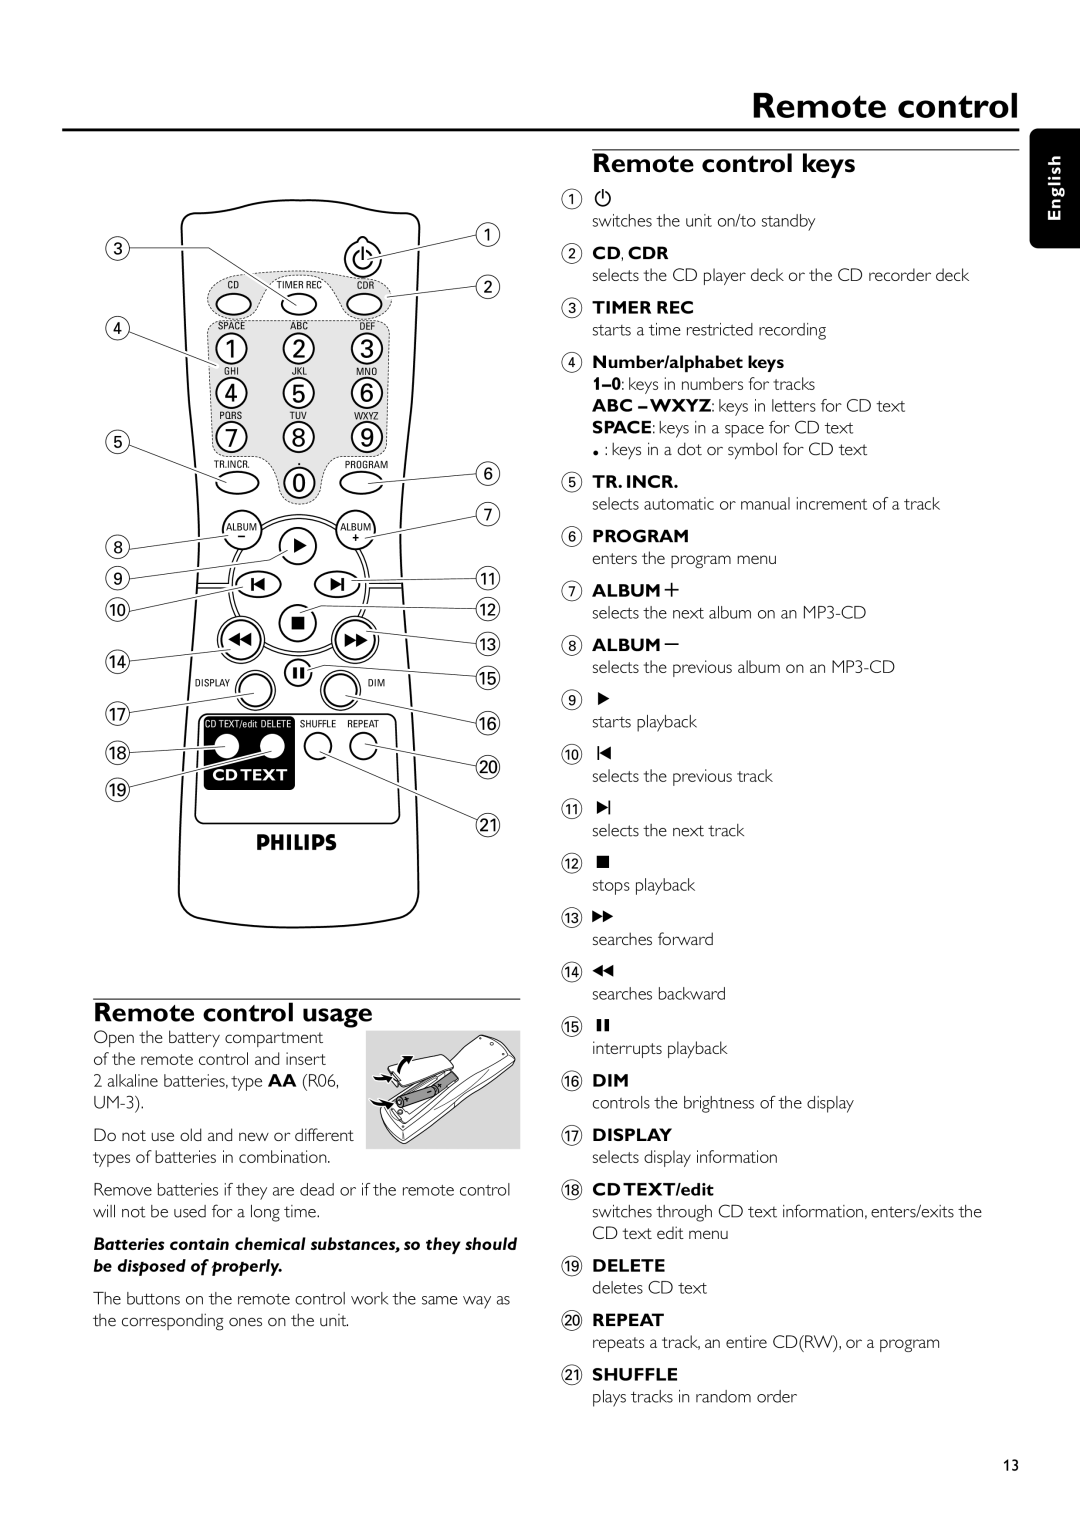 Philips CDR-795 Remote control keys, Remote control usage, 2 CD, CDR, English, Timer Rec, 5 TR. INCR, Program, Album+ 